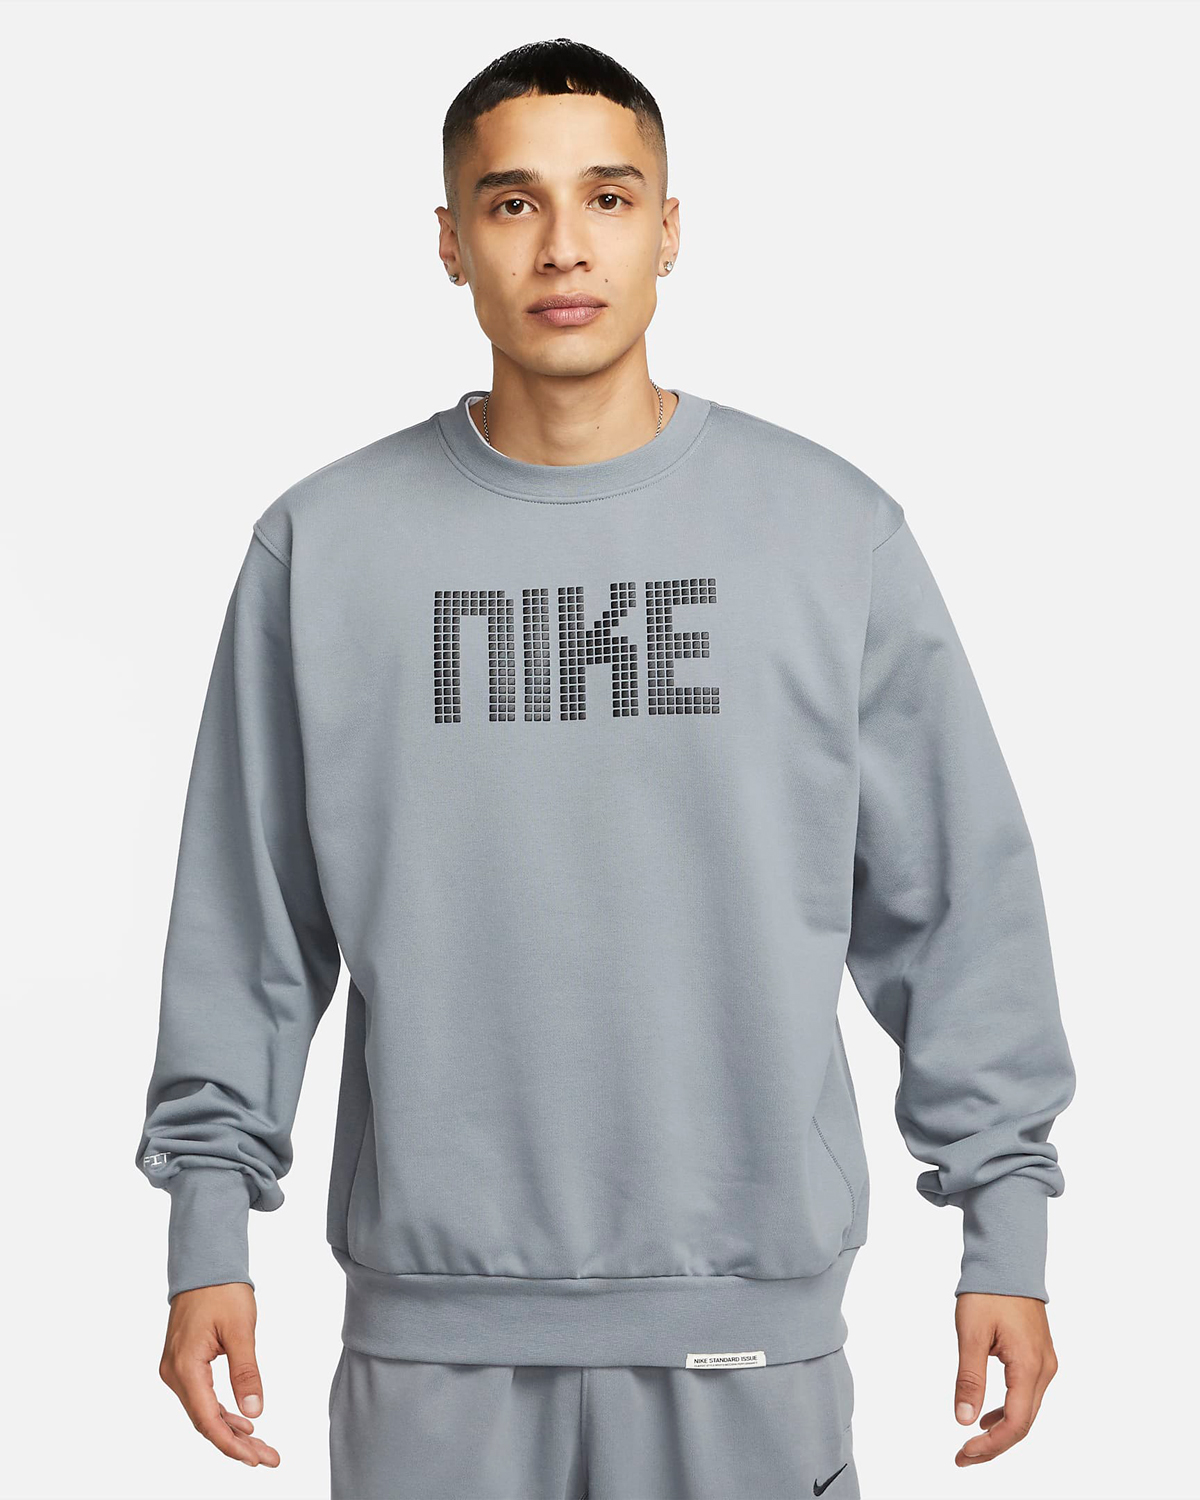 Nike-Standard-Issue-Sweatshirt-Cool-Grey